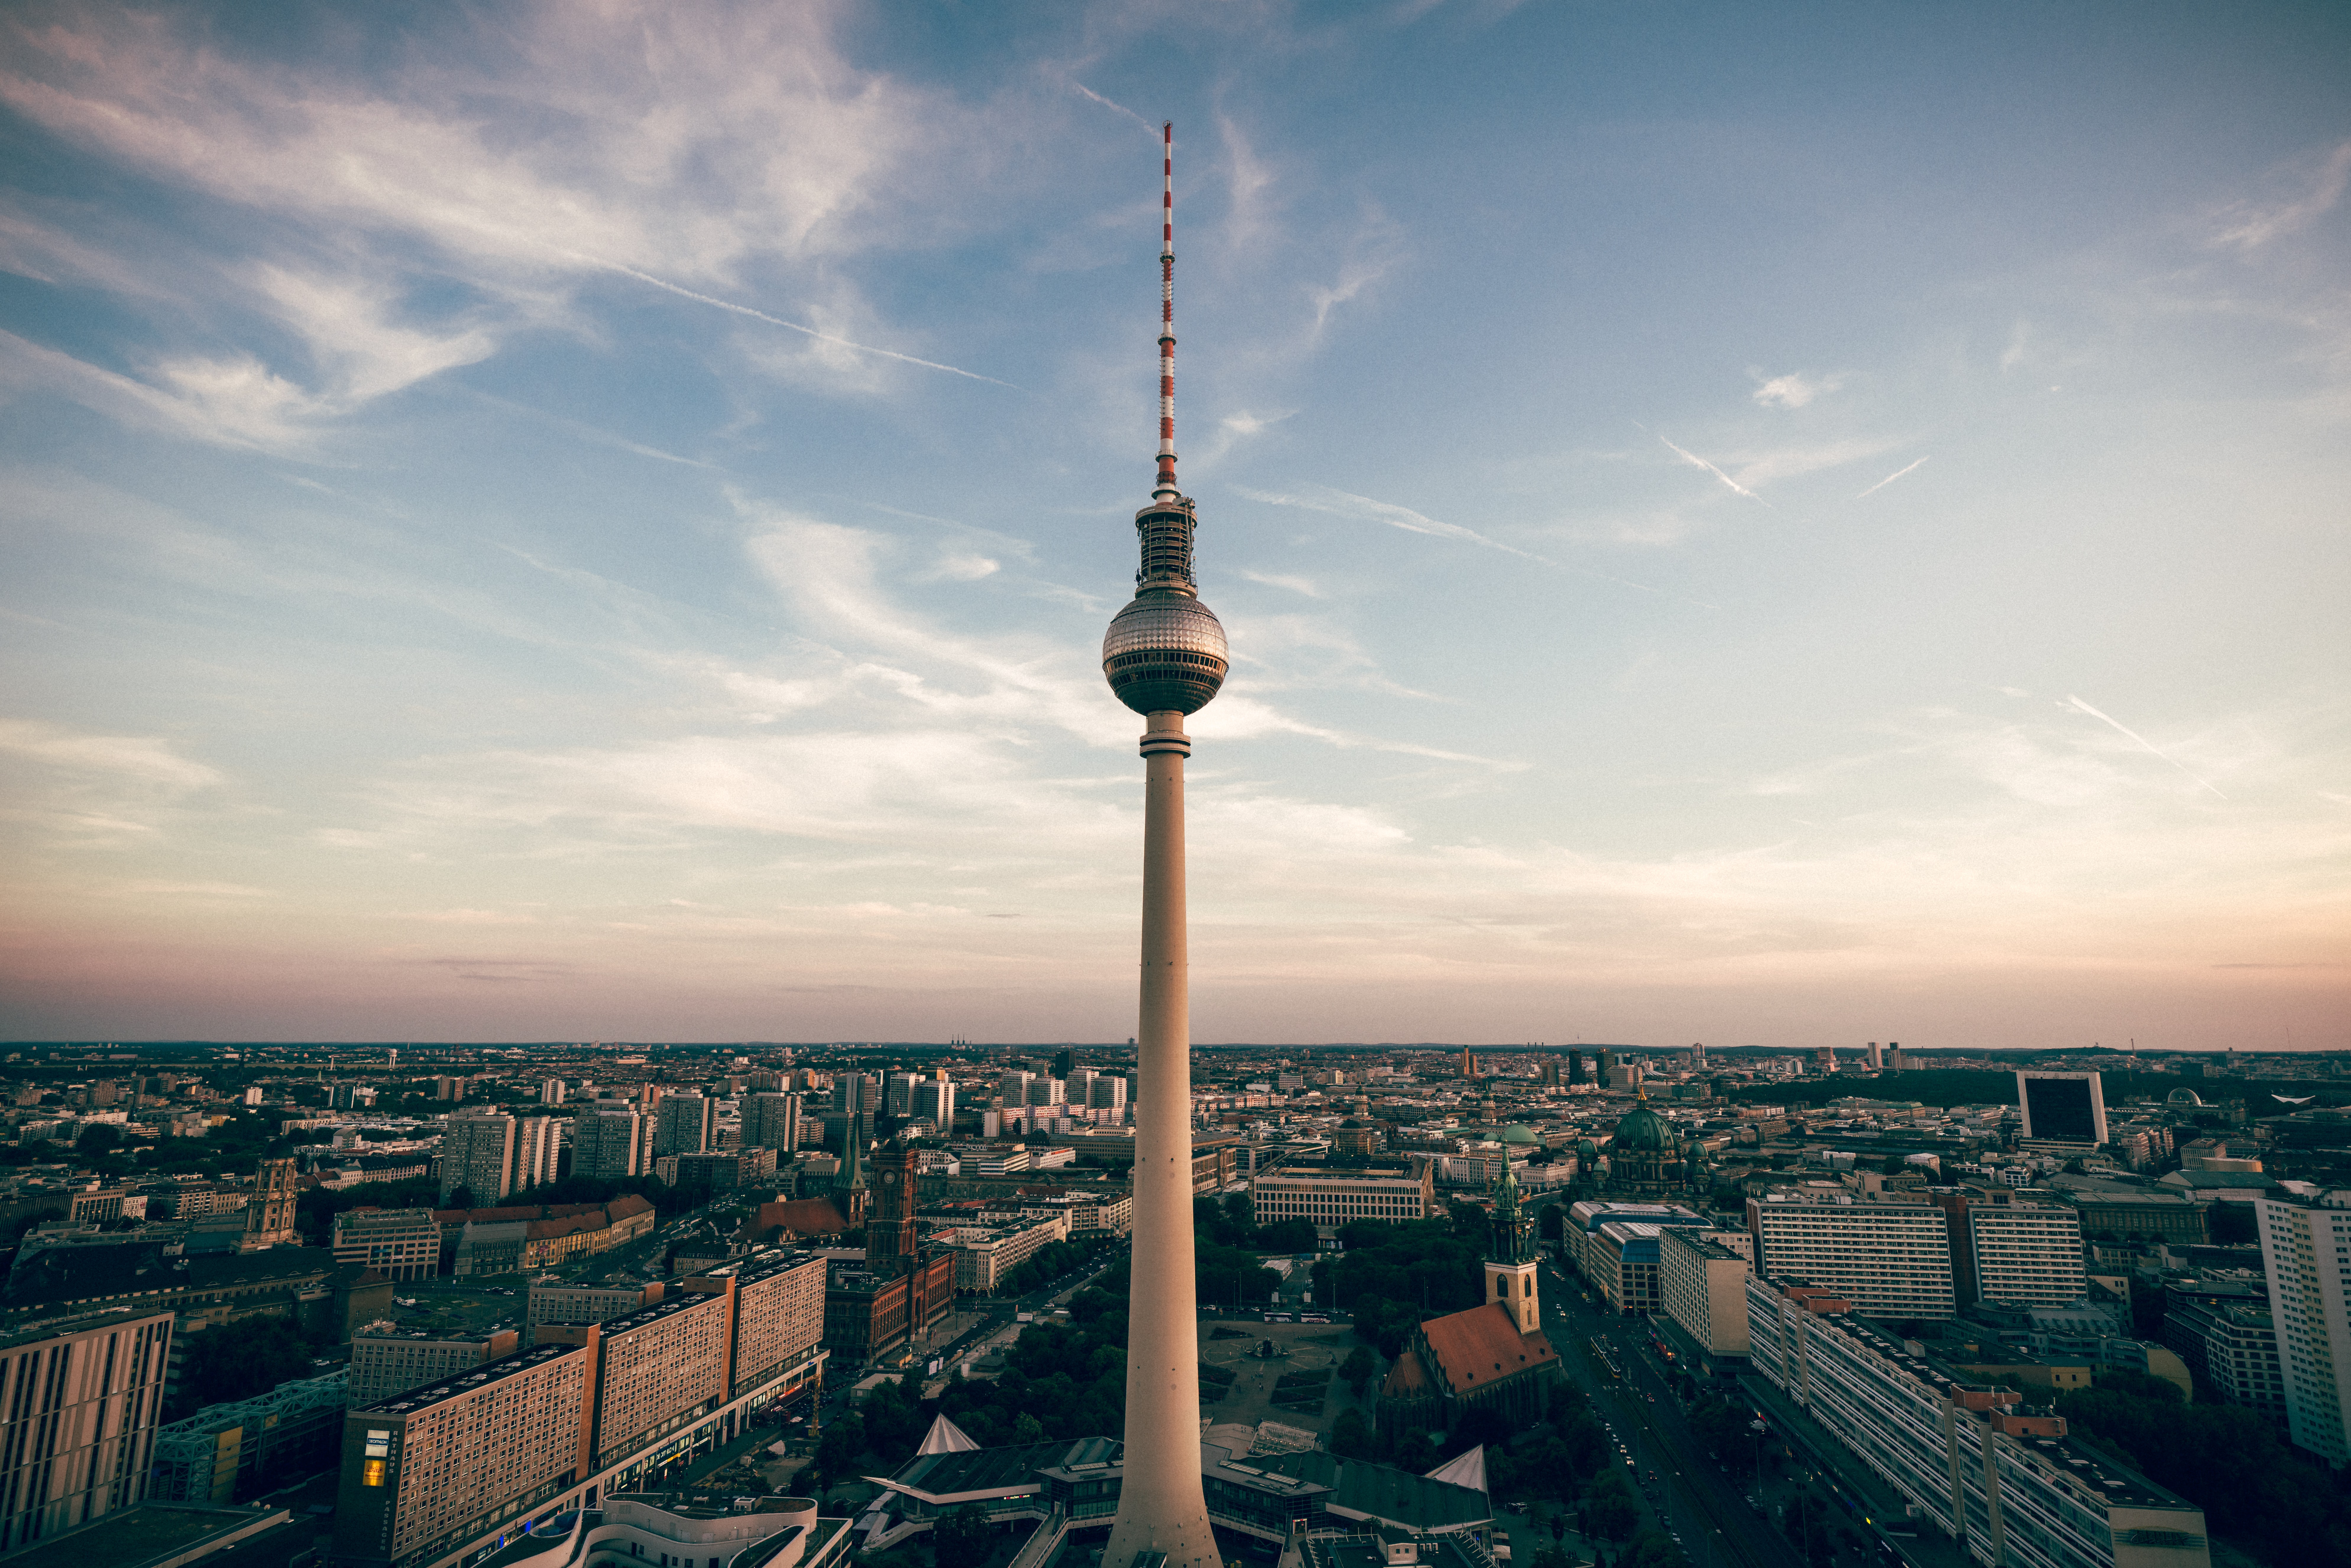 Berlin tower in the city of Berlin